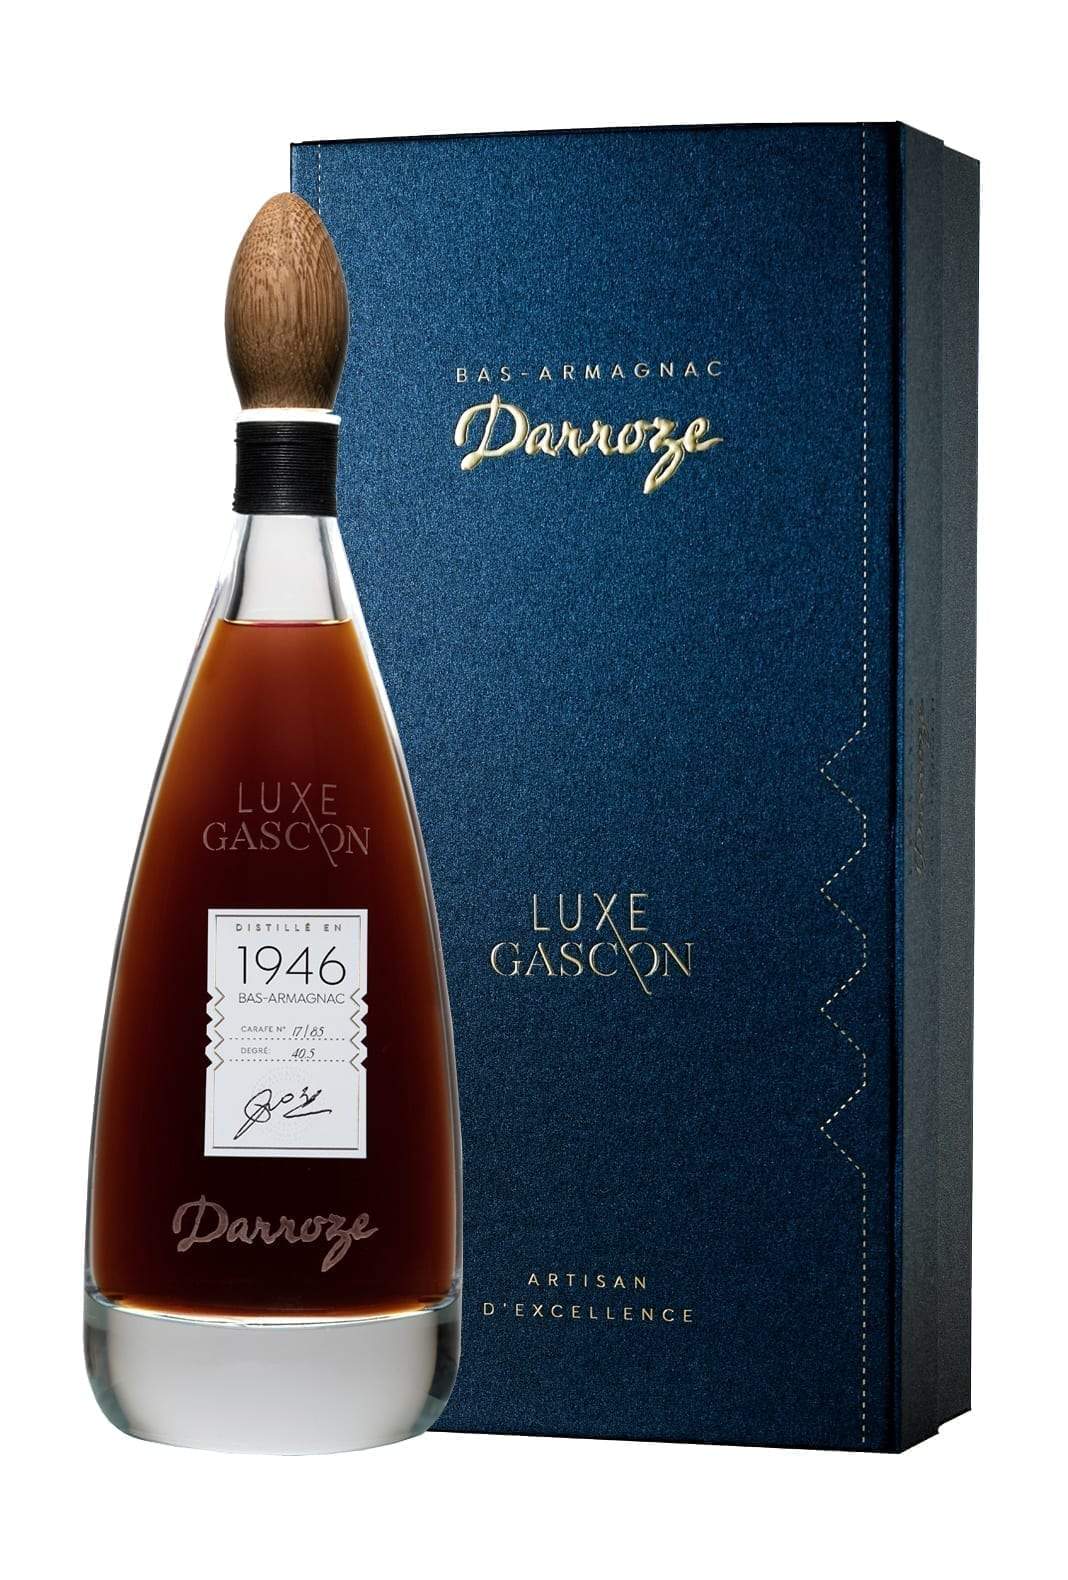 Darroze Armagnac Le Luxe Gascon 1946 40.4% 700ml | Brandy | Shop online at Spirits of France